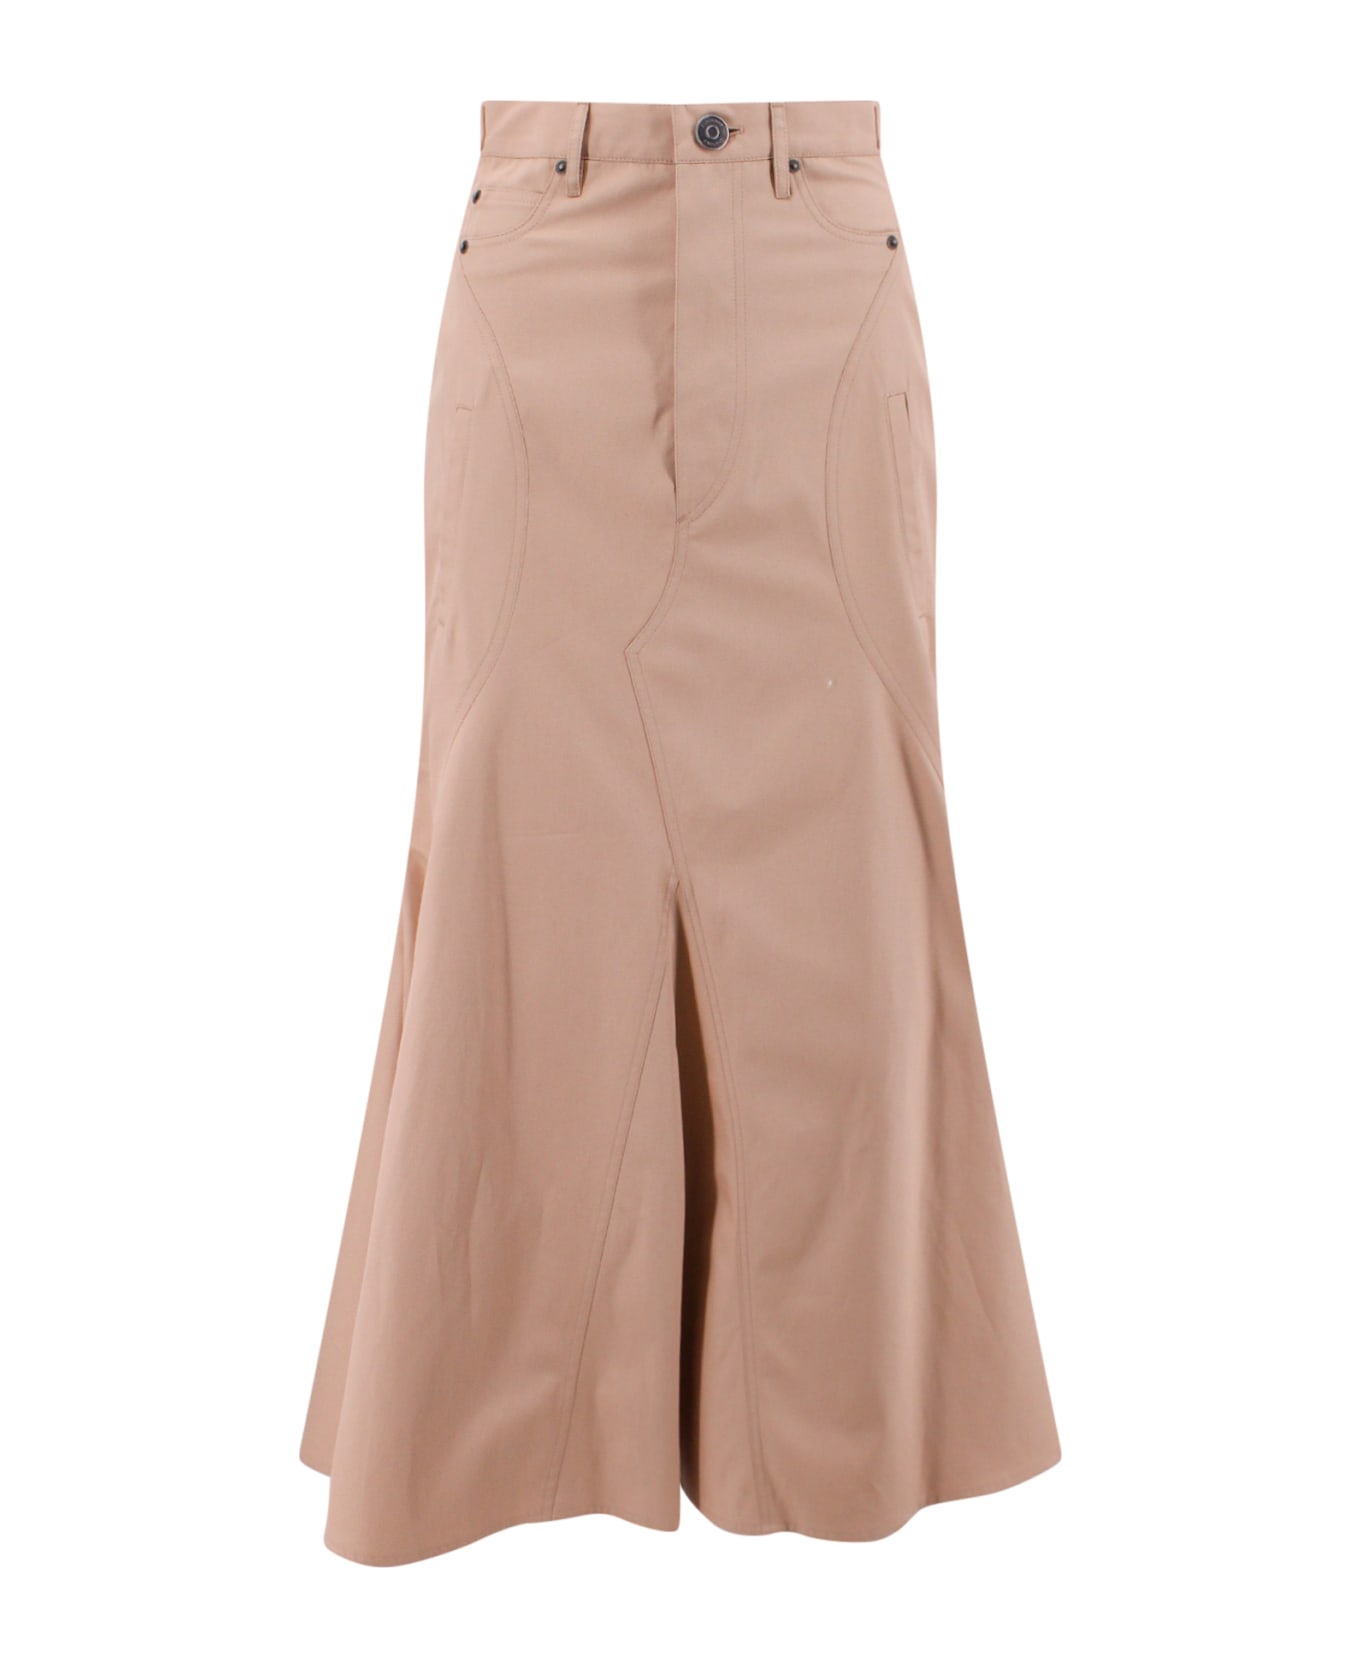 Burberry Cotton Gabardine Long Skirt - Beige